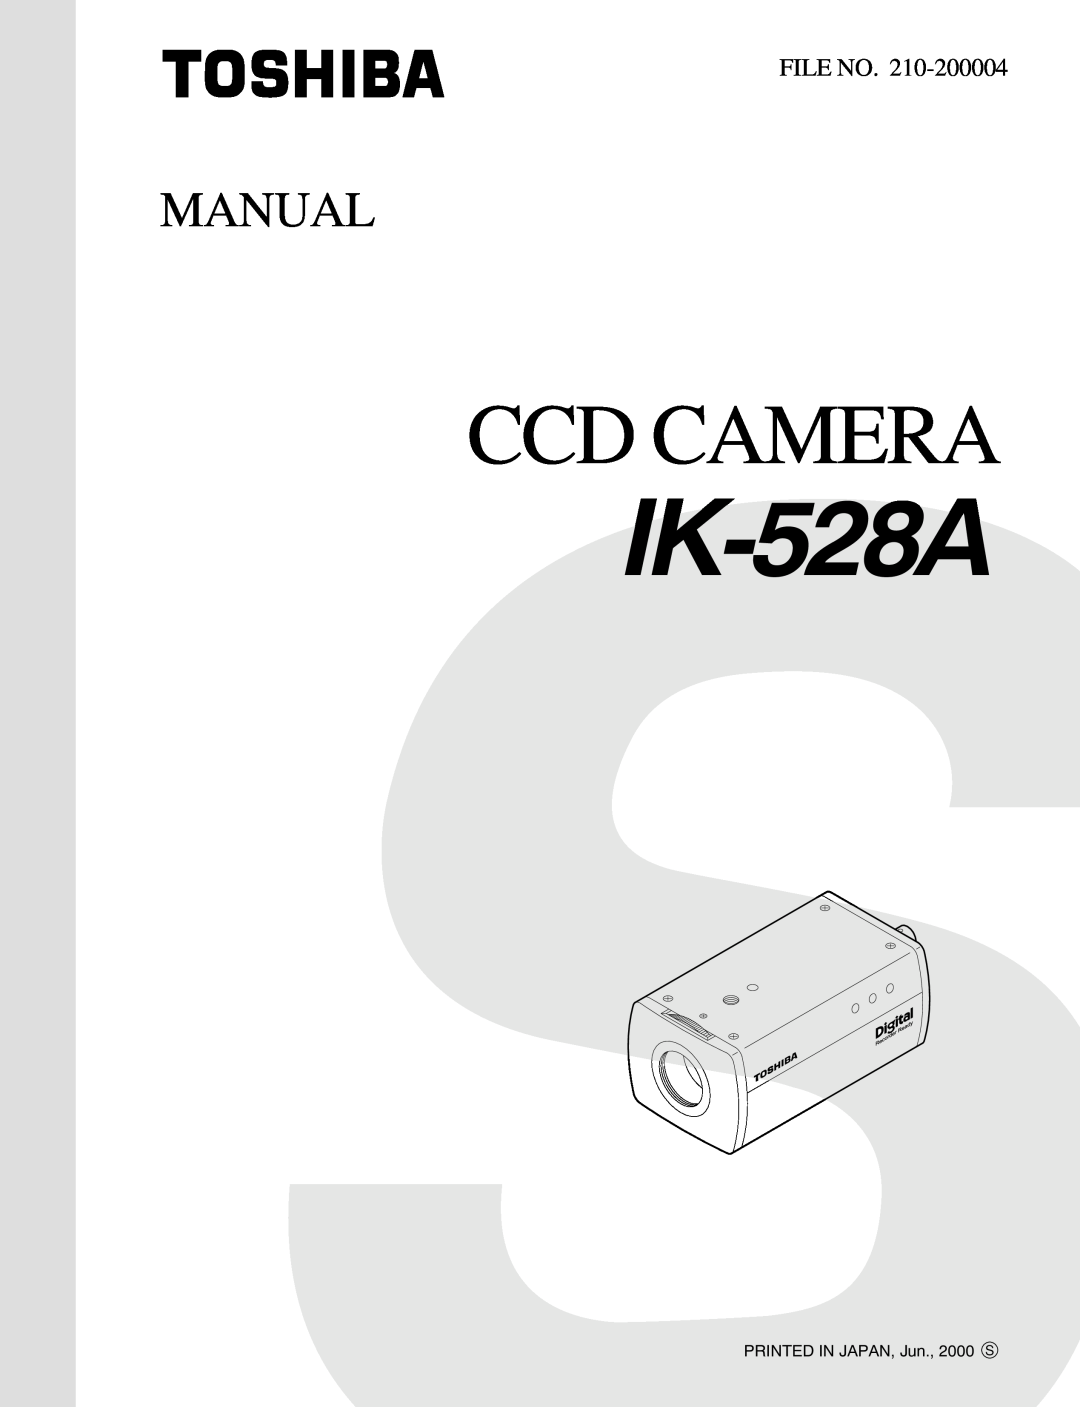 Toshiba IK-528A manual Ccd Camera, Manual, File No 